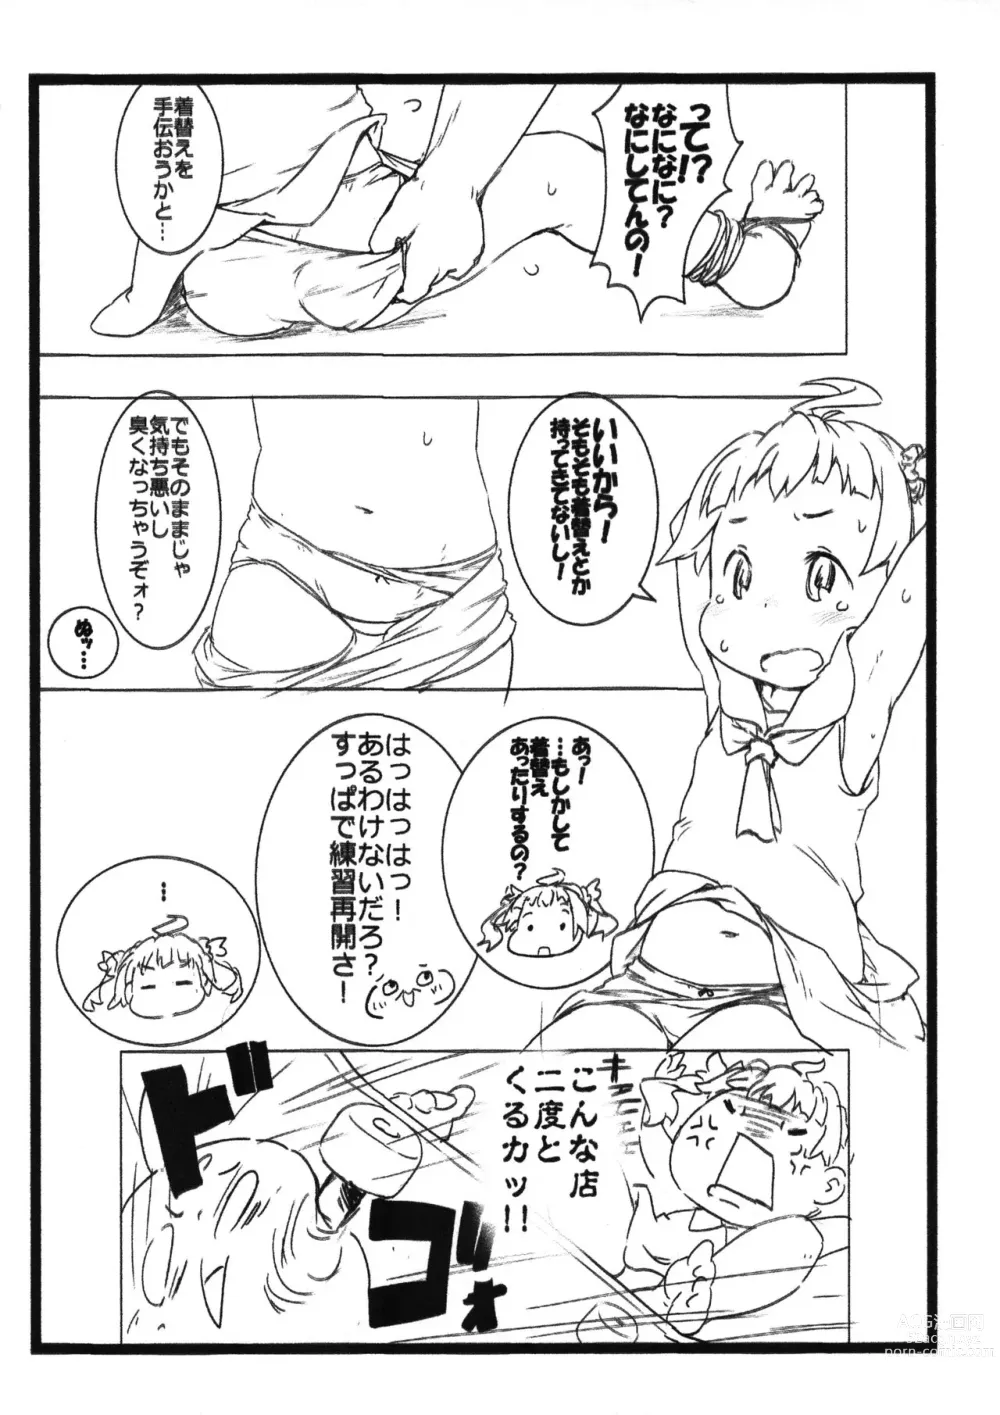 Page 6 of doujinshi Sukebe Zukan